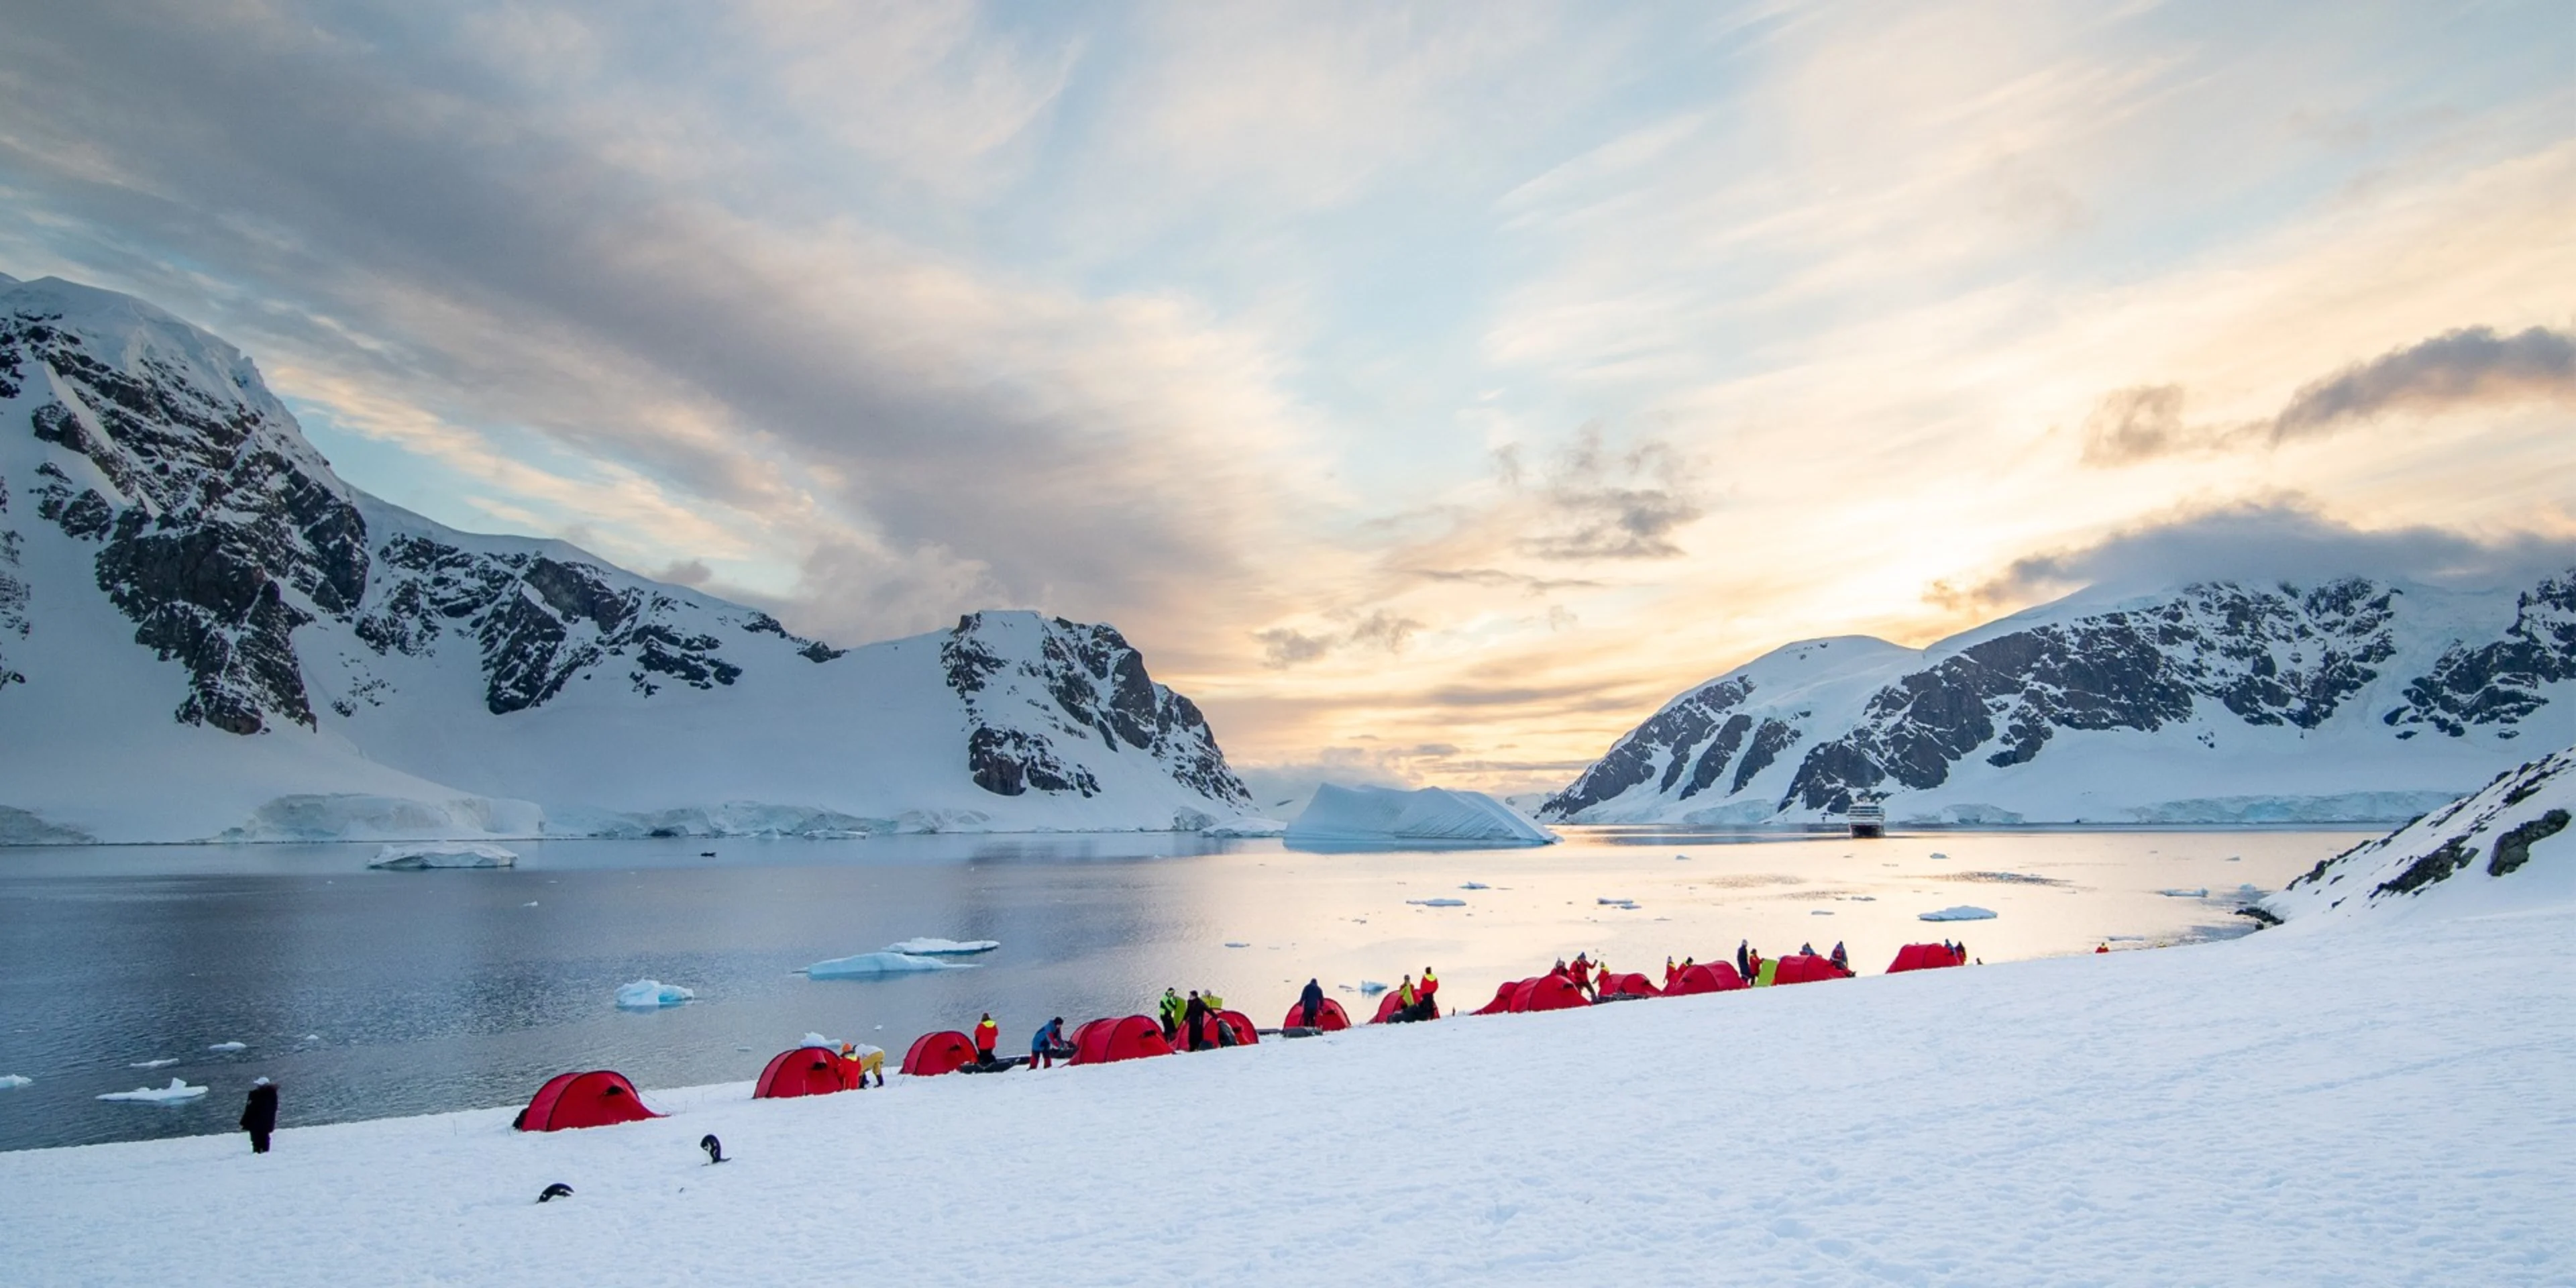 Camping (An Amundsen Night) on Danco Island, Antarctica. Photo: Espen Mills